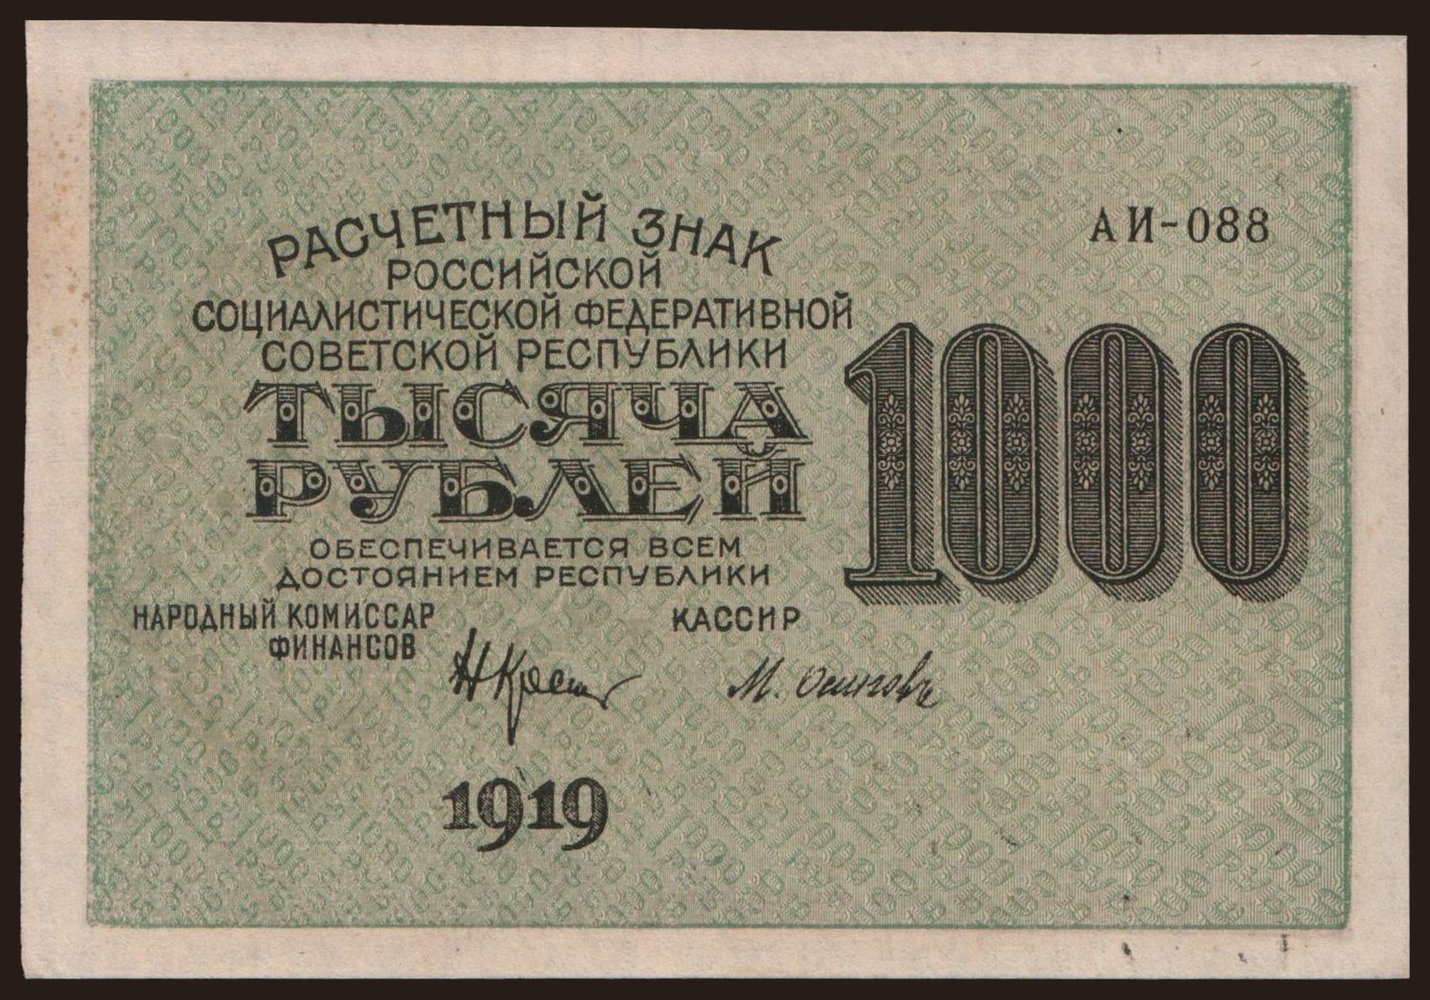 1000 rubel, 1919